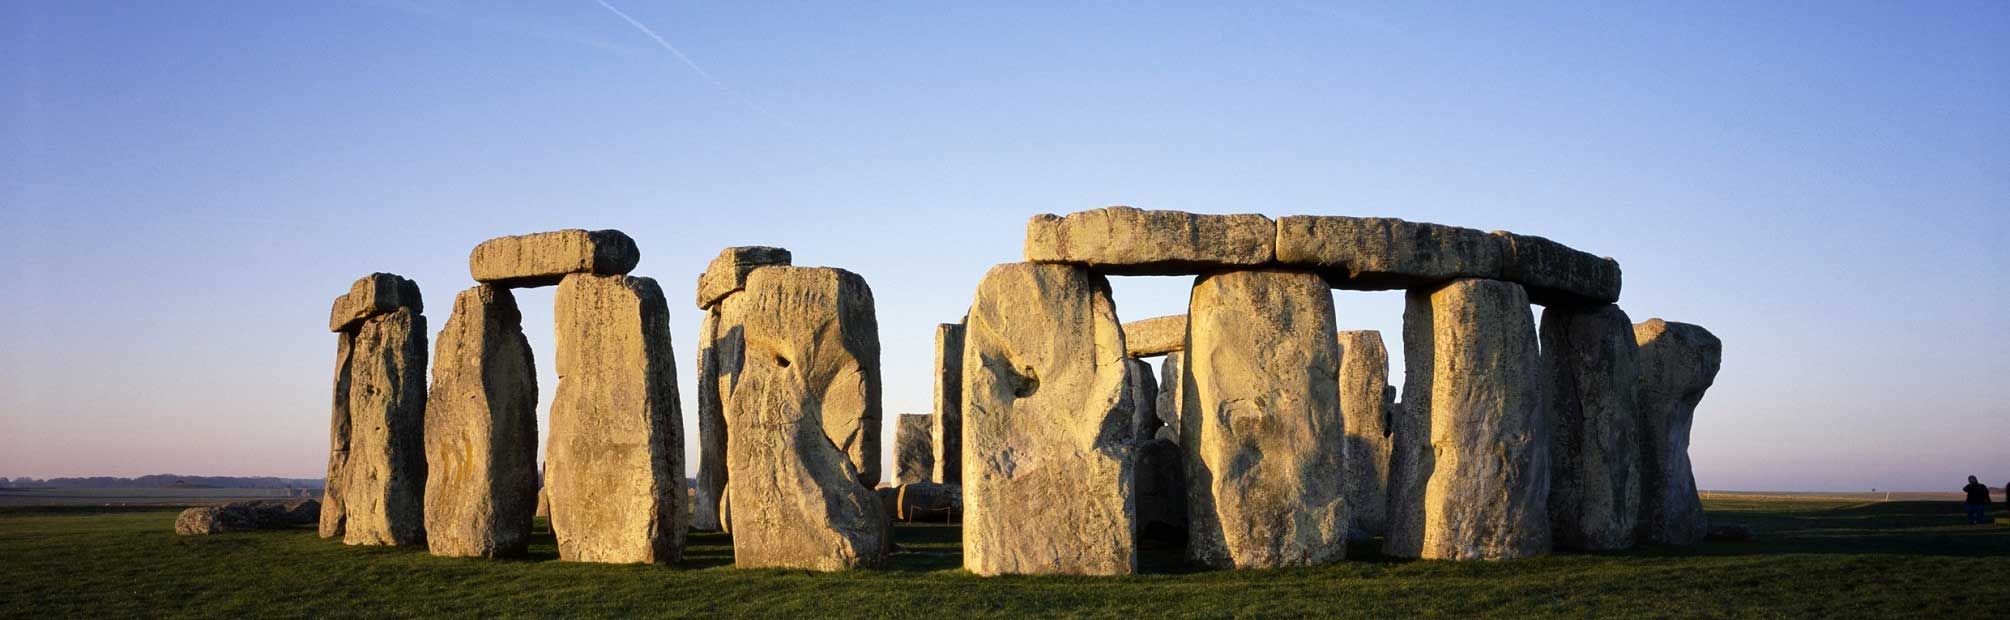 Panoramic View Of Stonehenge In England